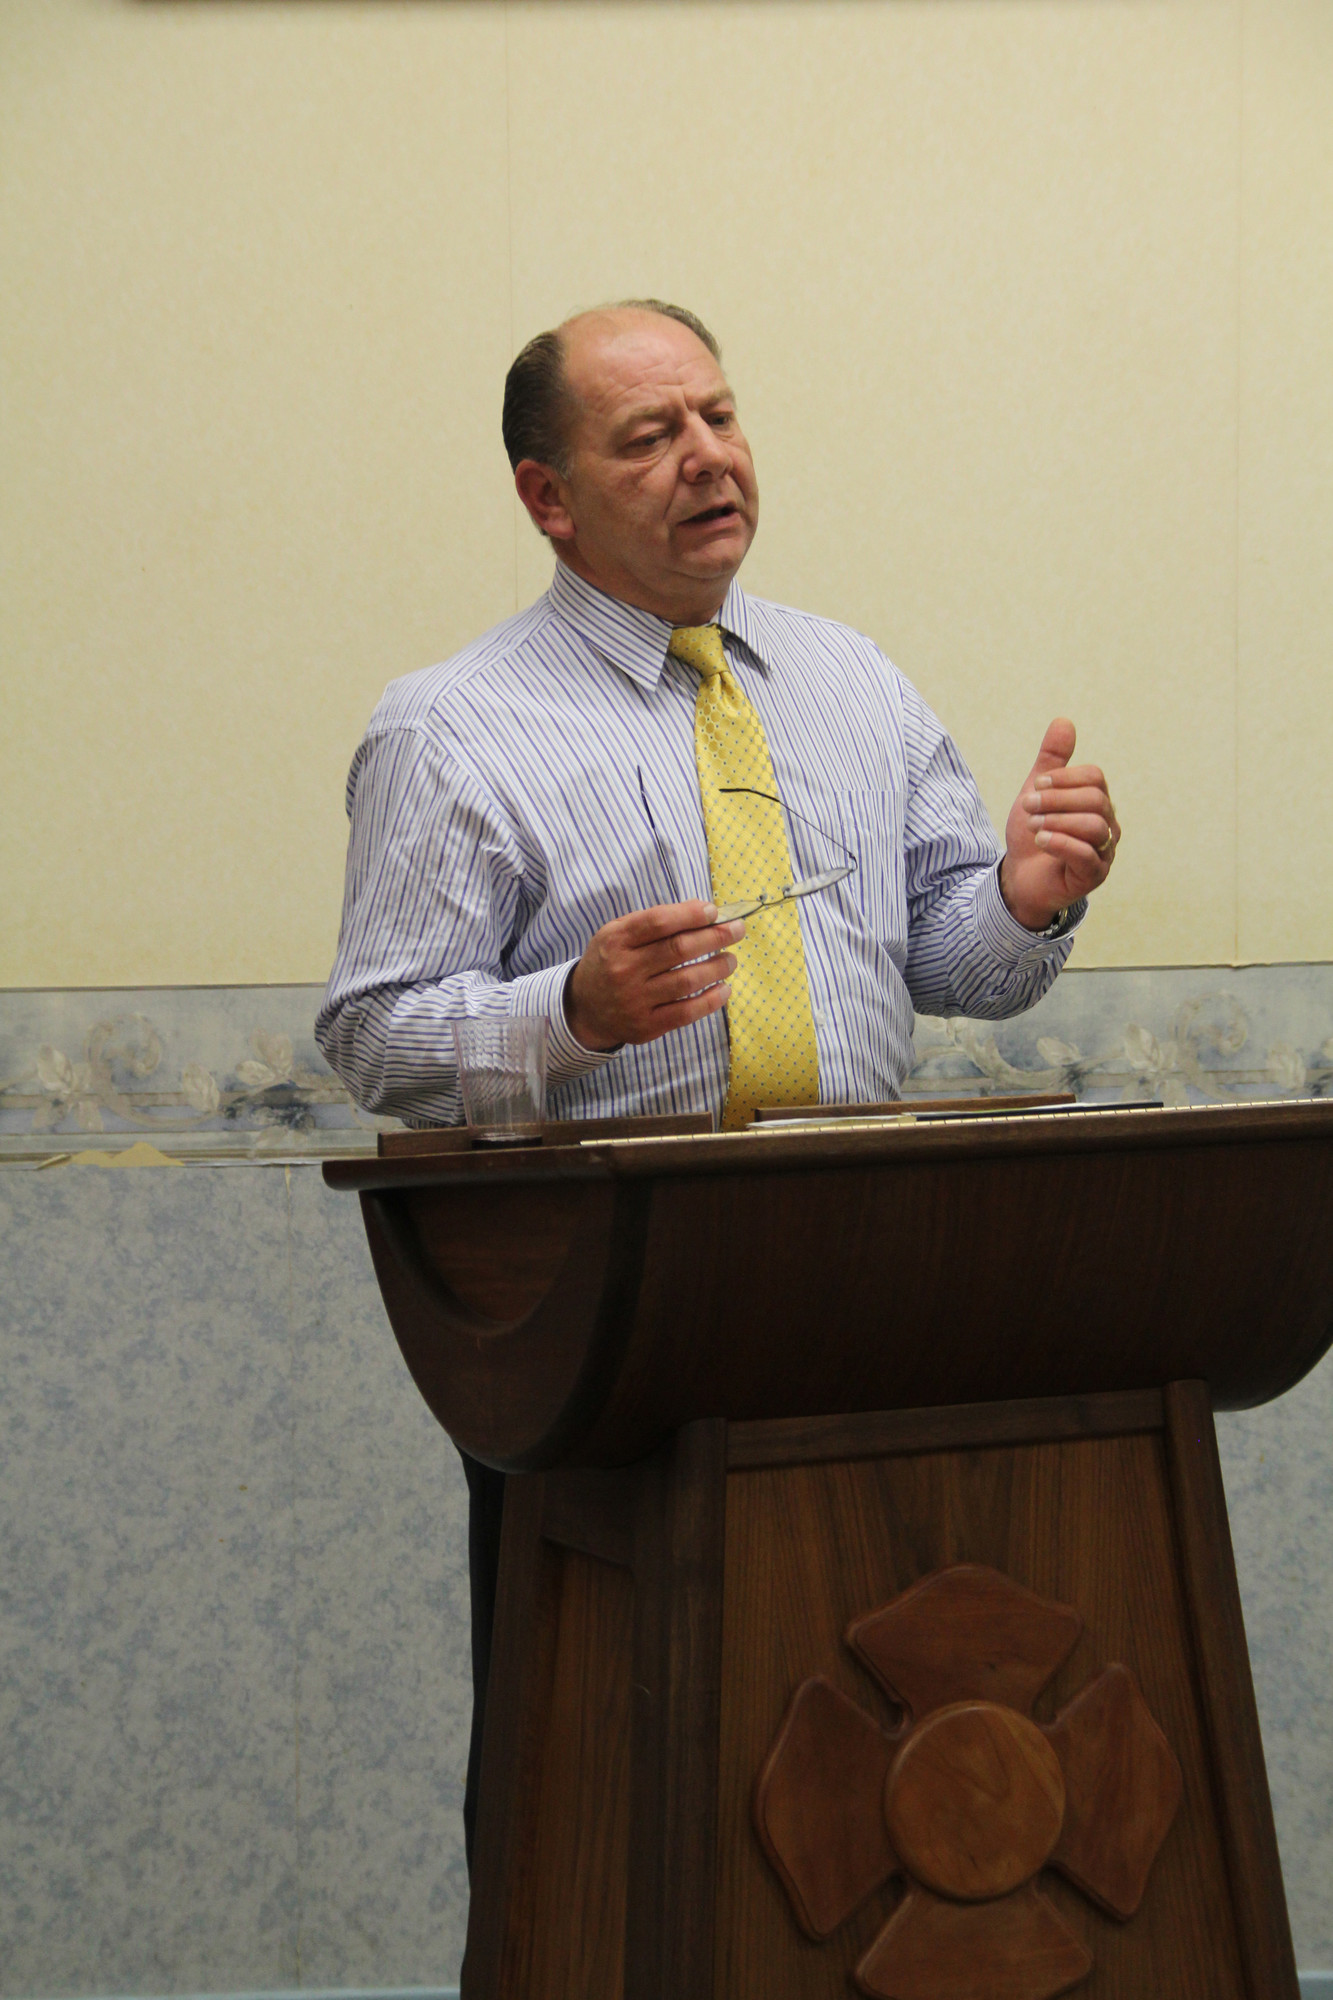 Past Chamber president Ken Jacobsen, of LPL Financial, organized the open house.